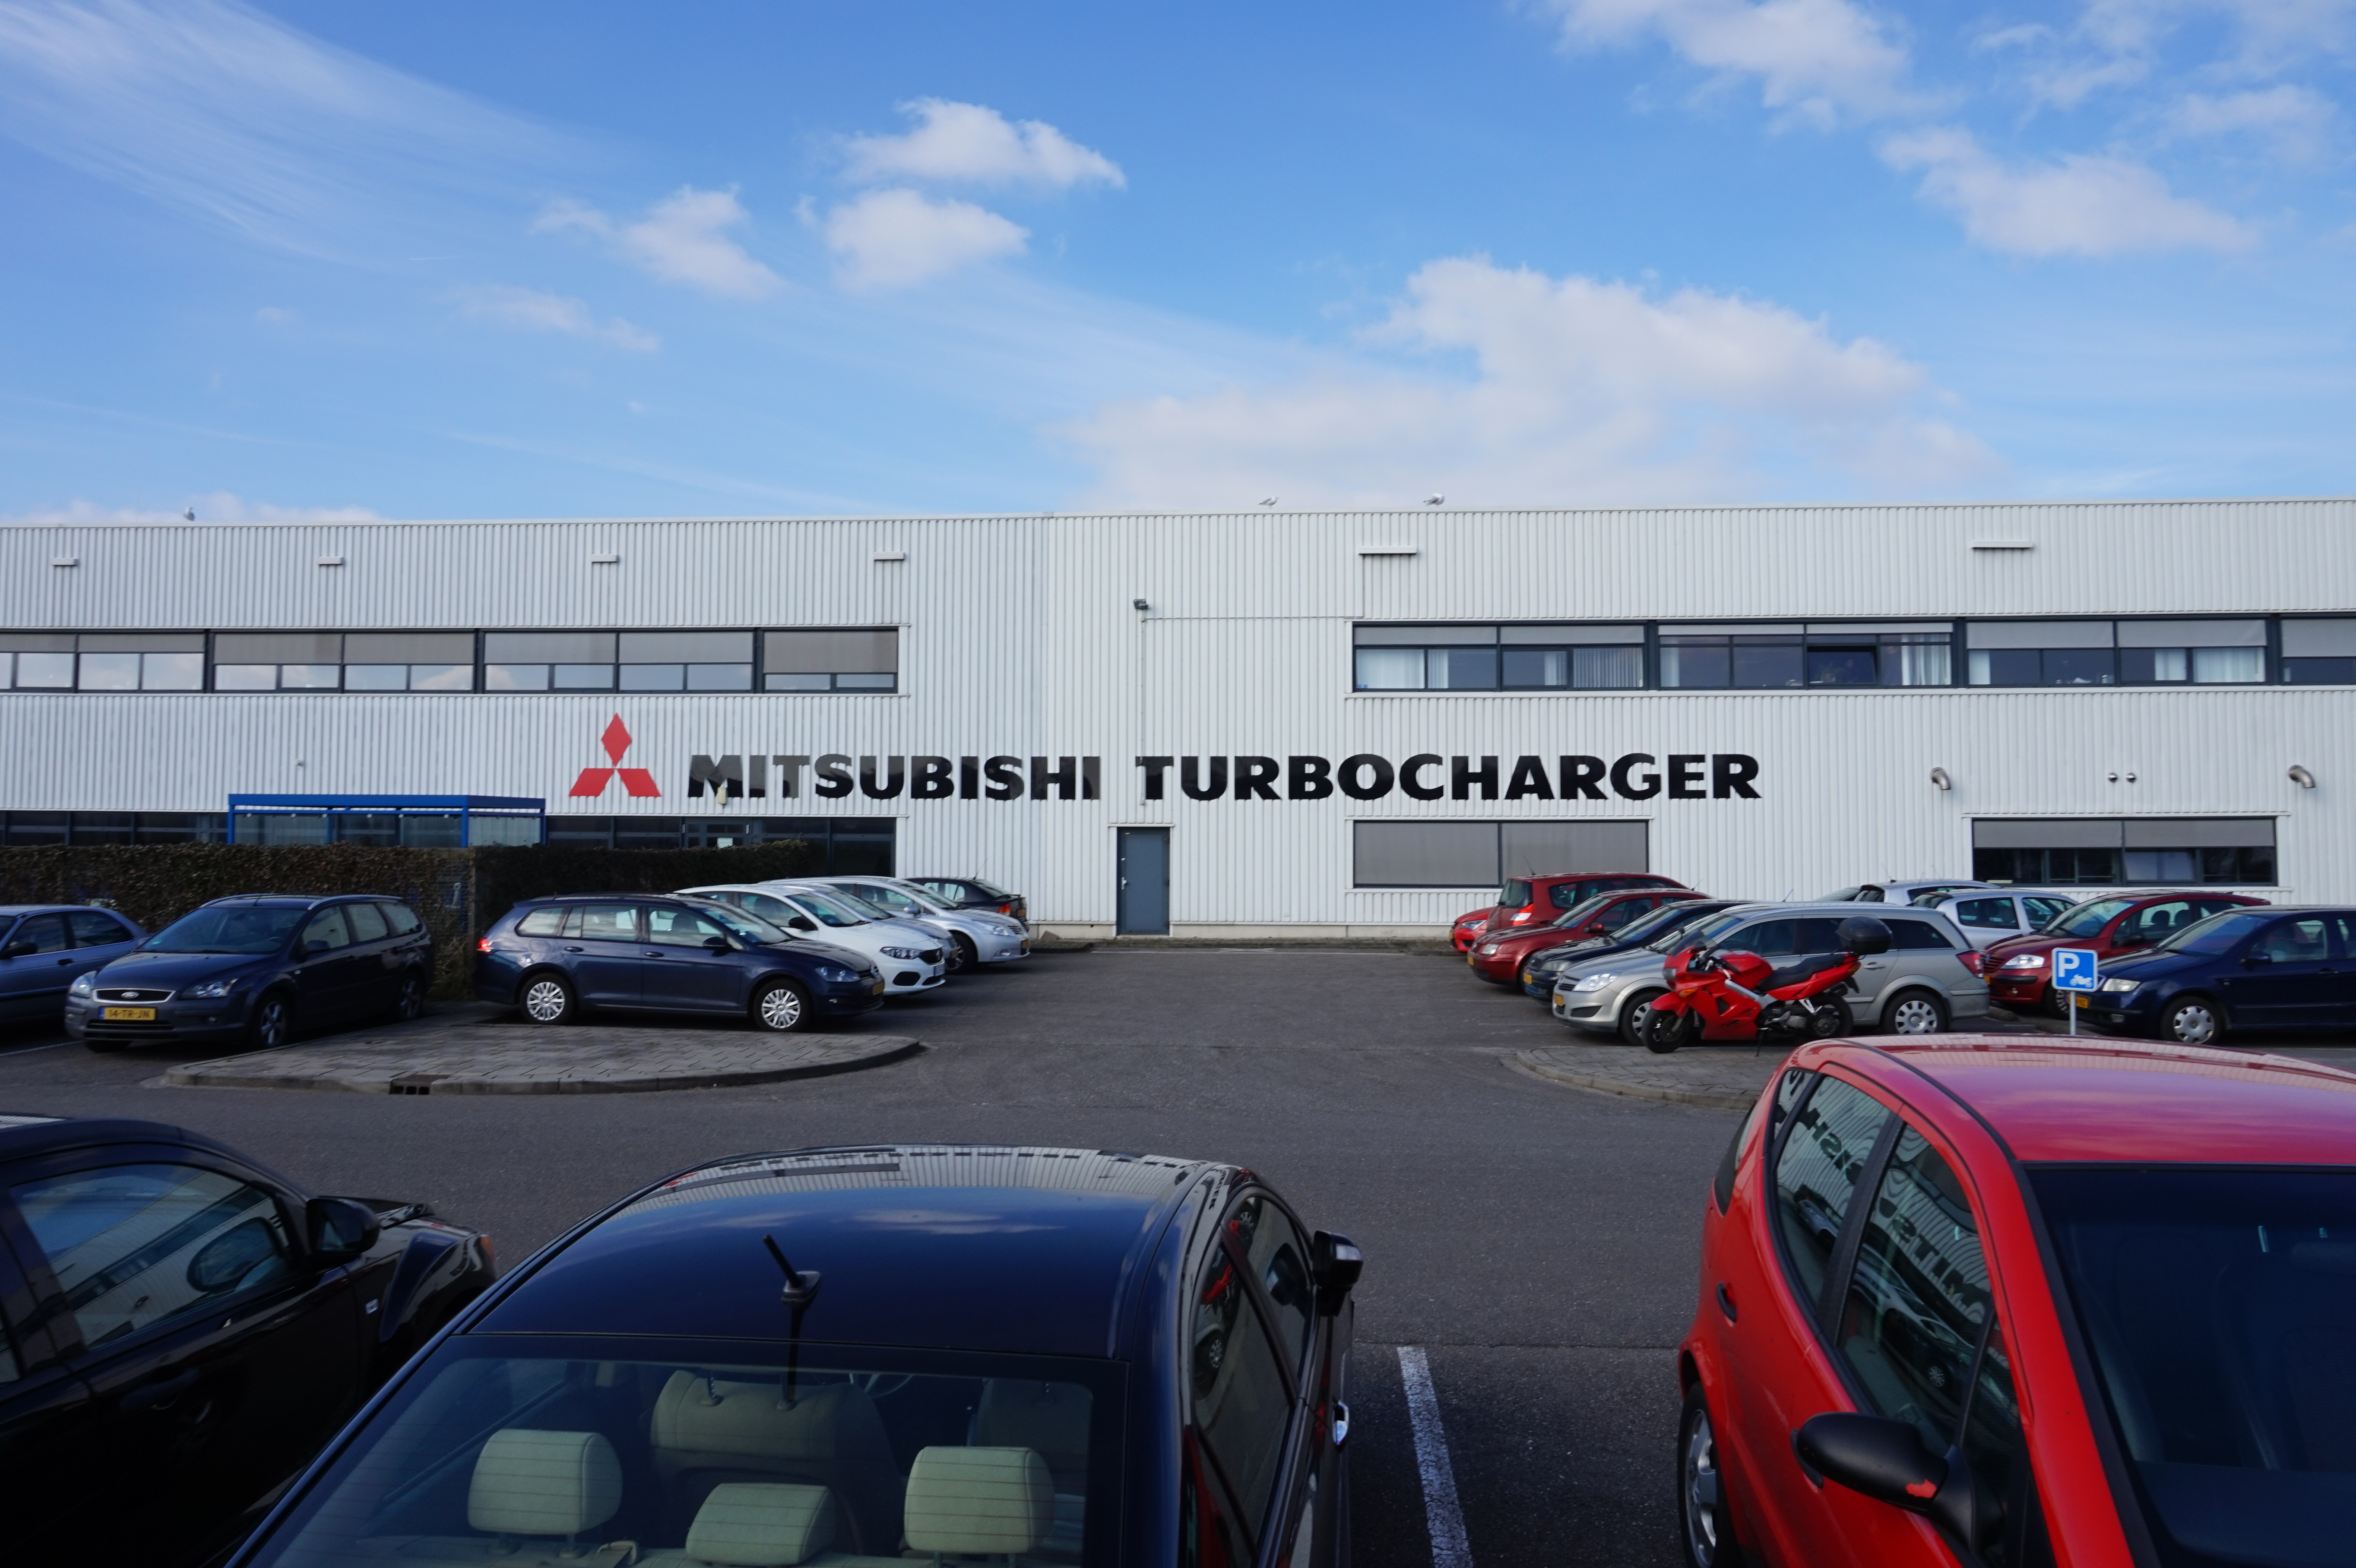 Mitsubishi Turbocharger